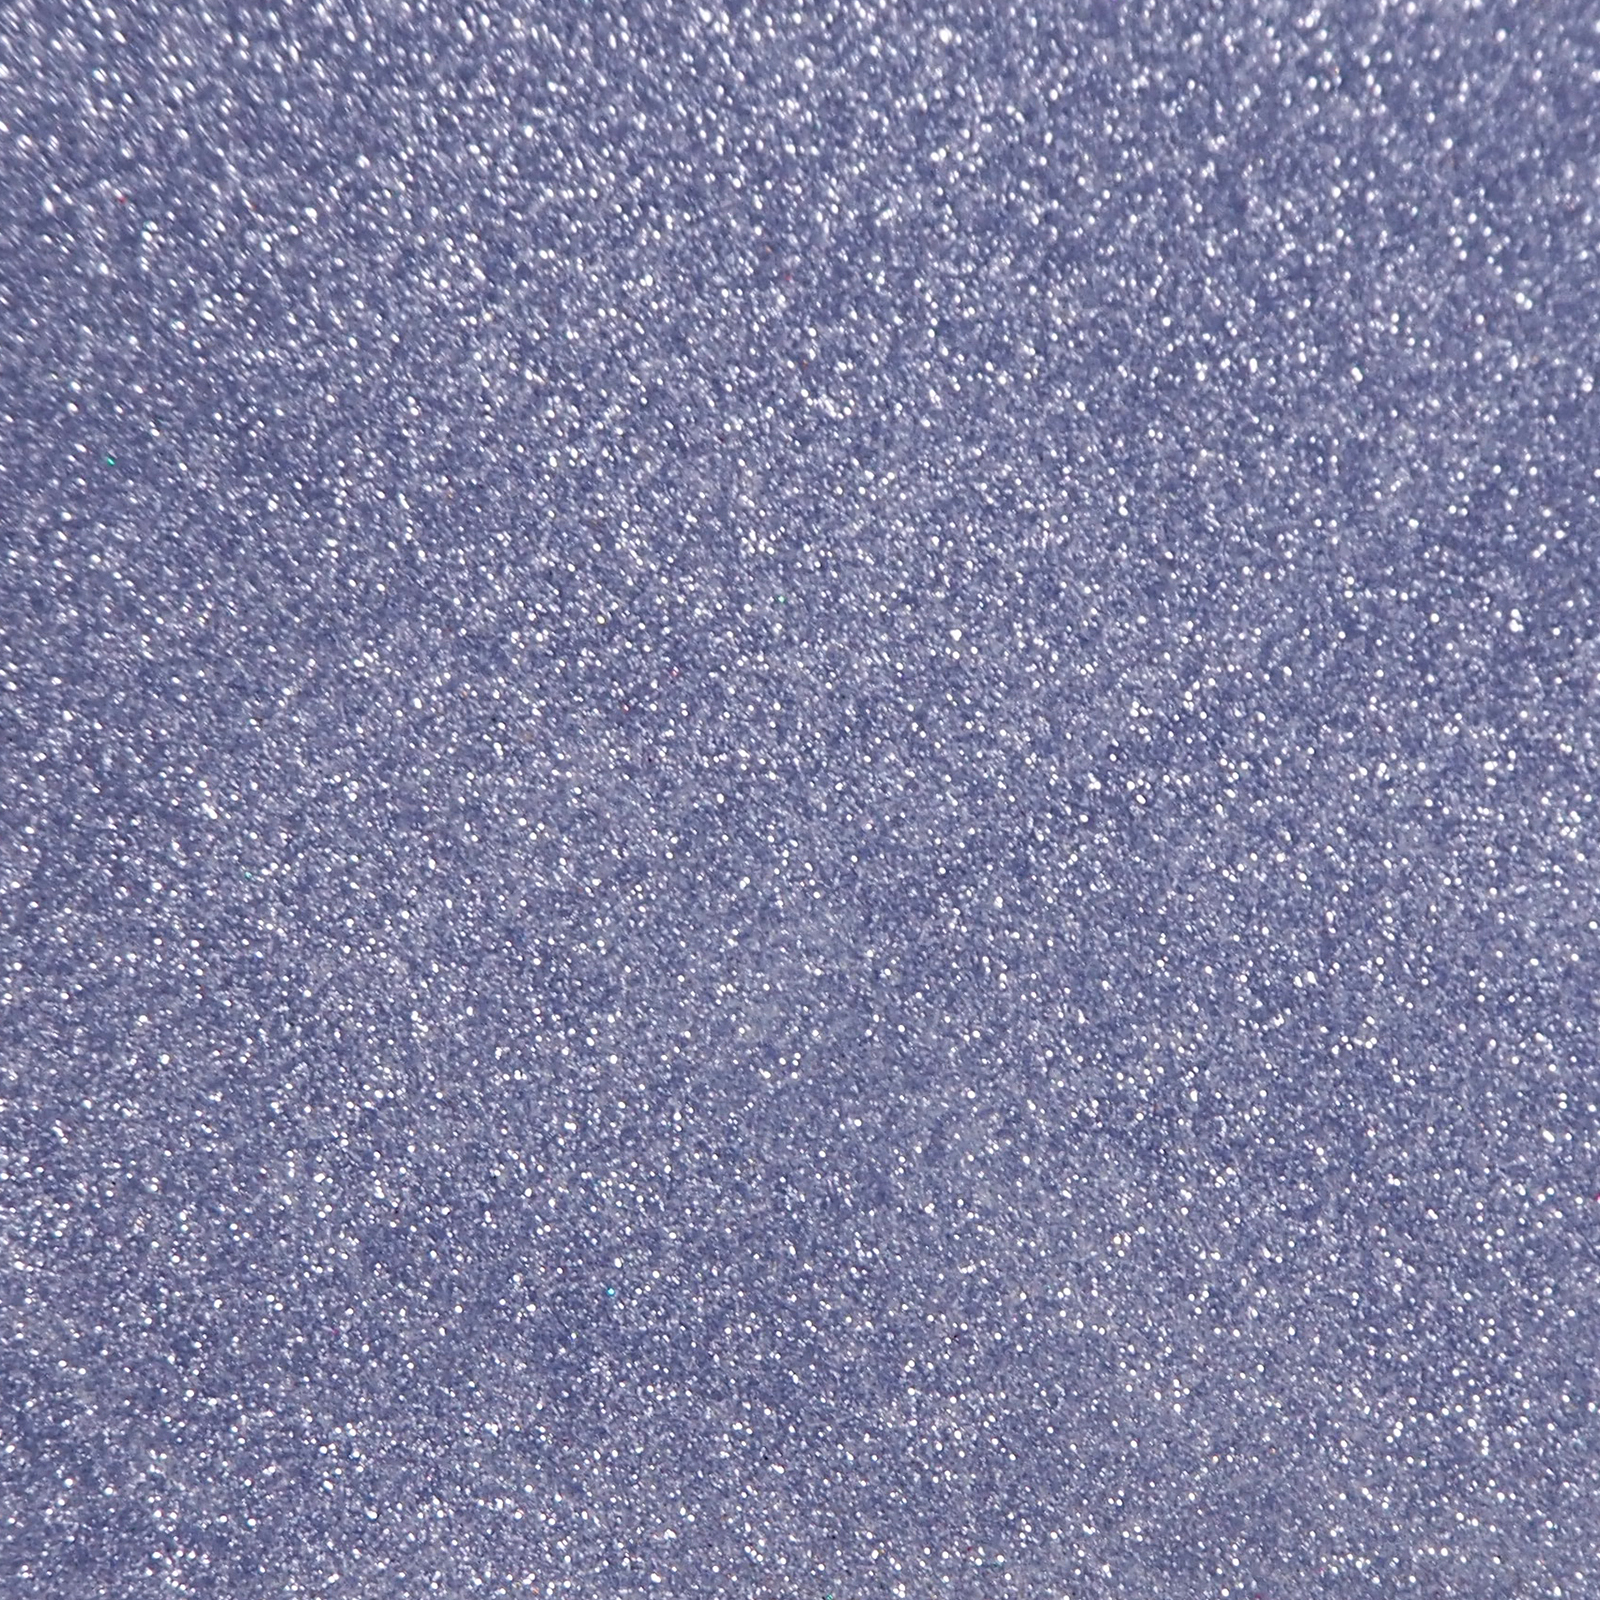 Cosmic Shimmer • Polierte Seidenglitzer Lilac